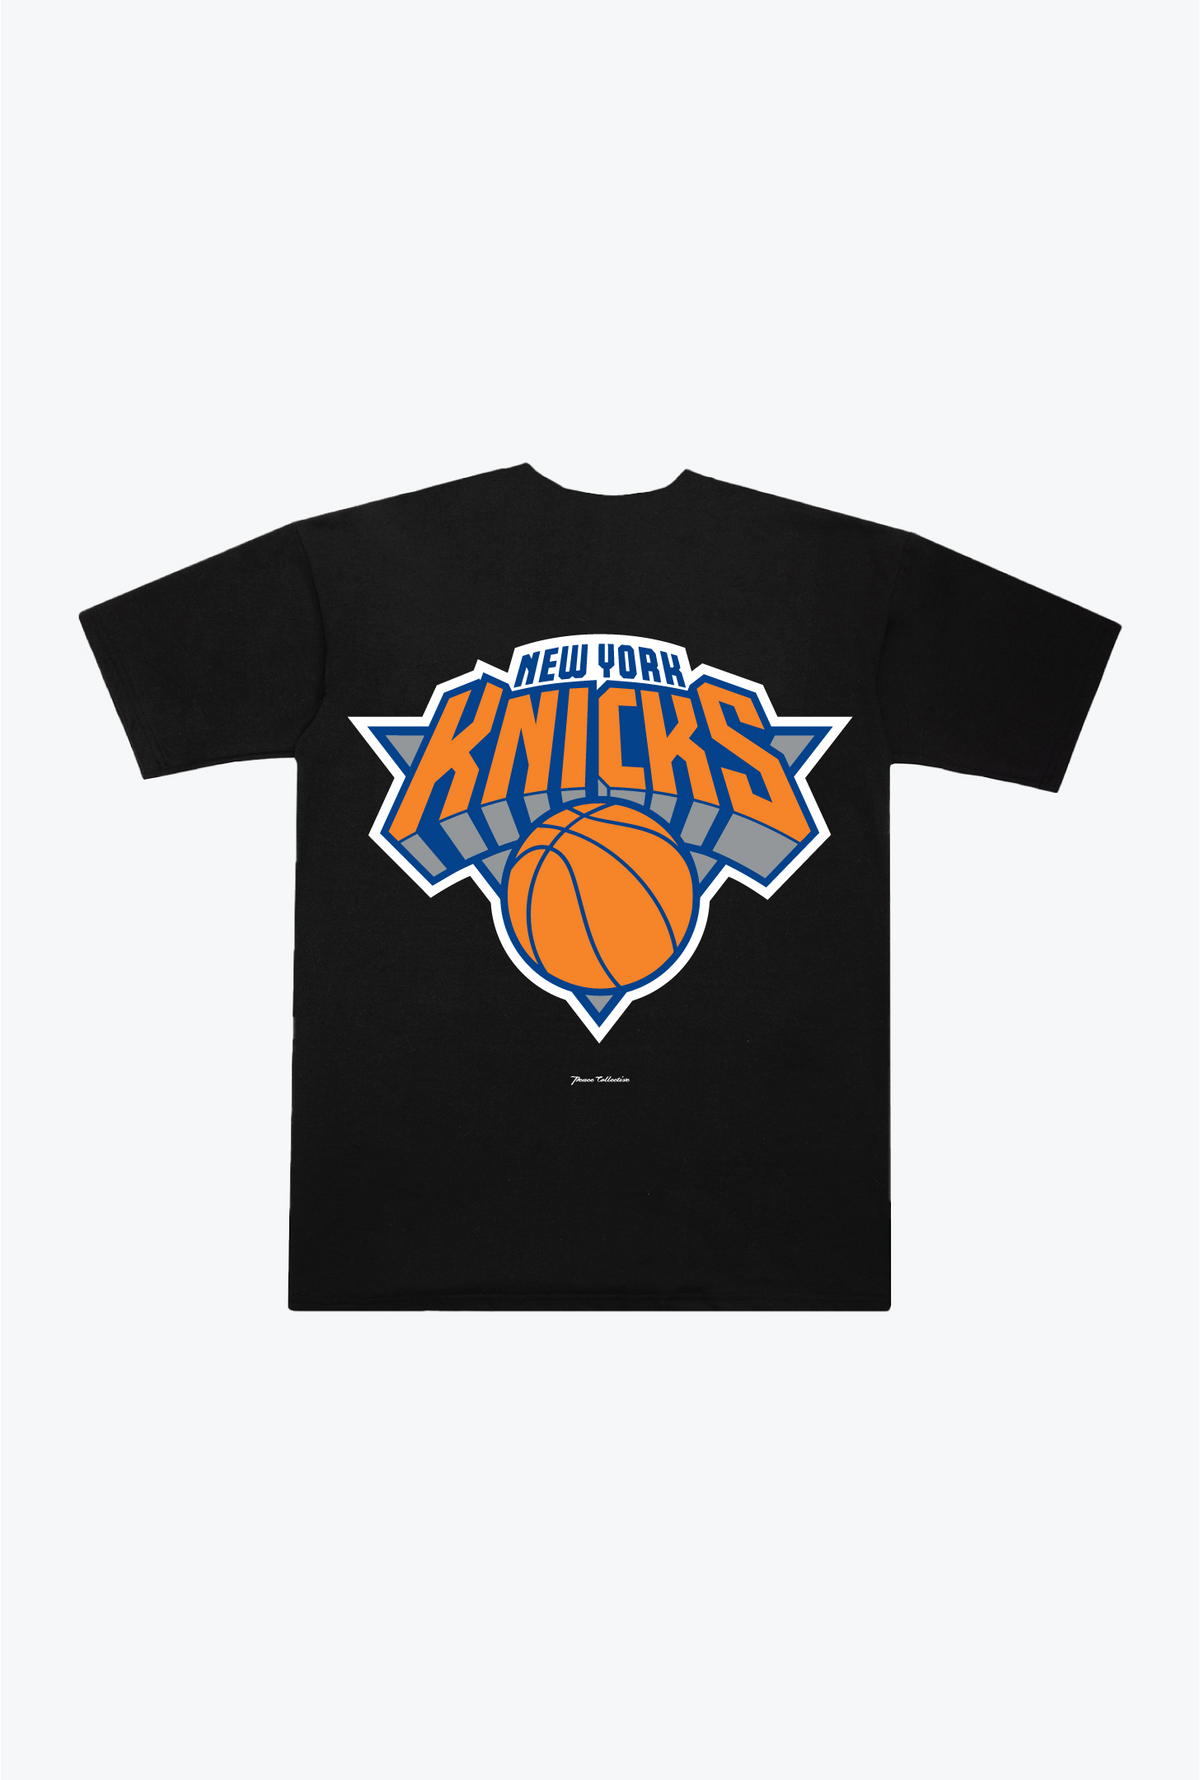 New York Knicks Heavyweight T-Shirt - Black